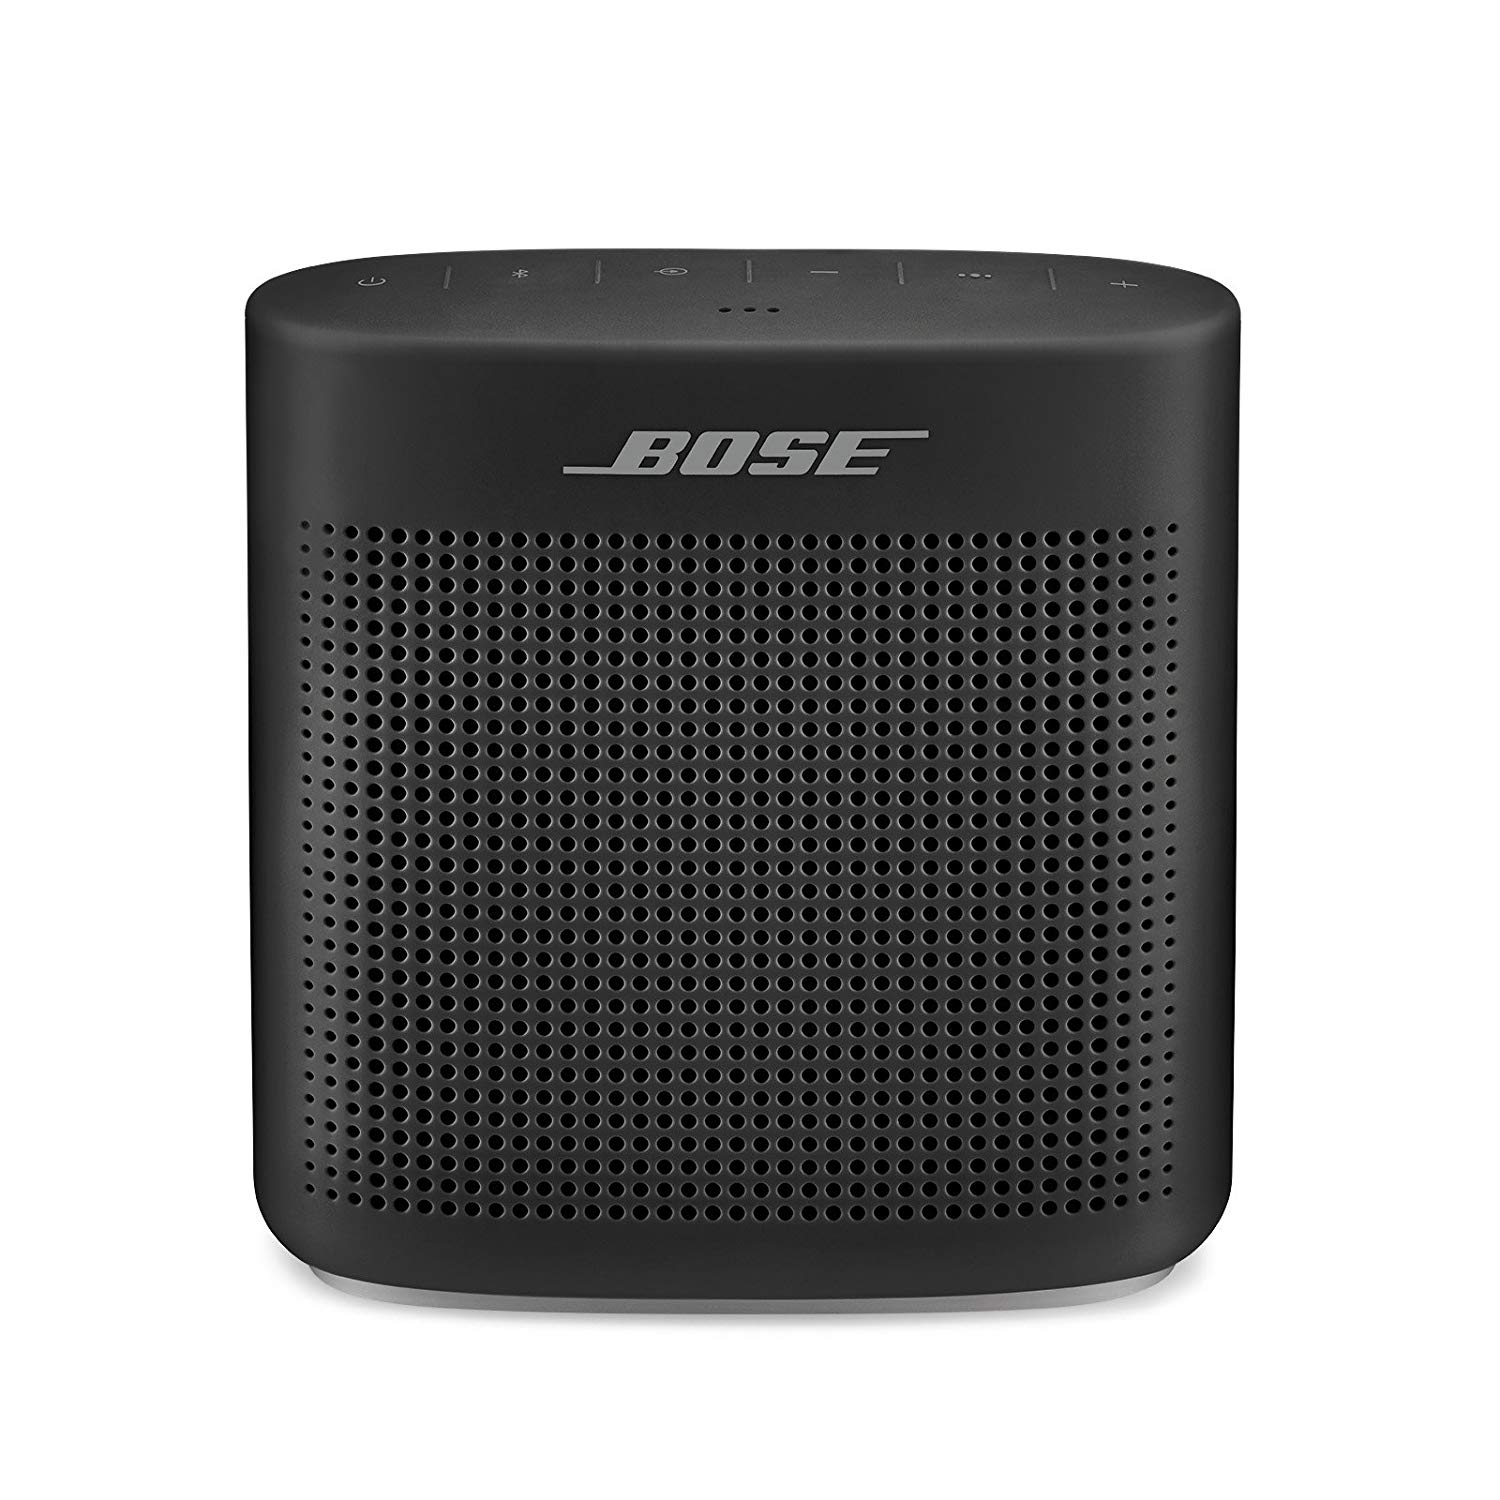 Bose Corporation Alto-falante Bose SoundLink colorido Bluetooth II - Preto suave